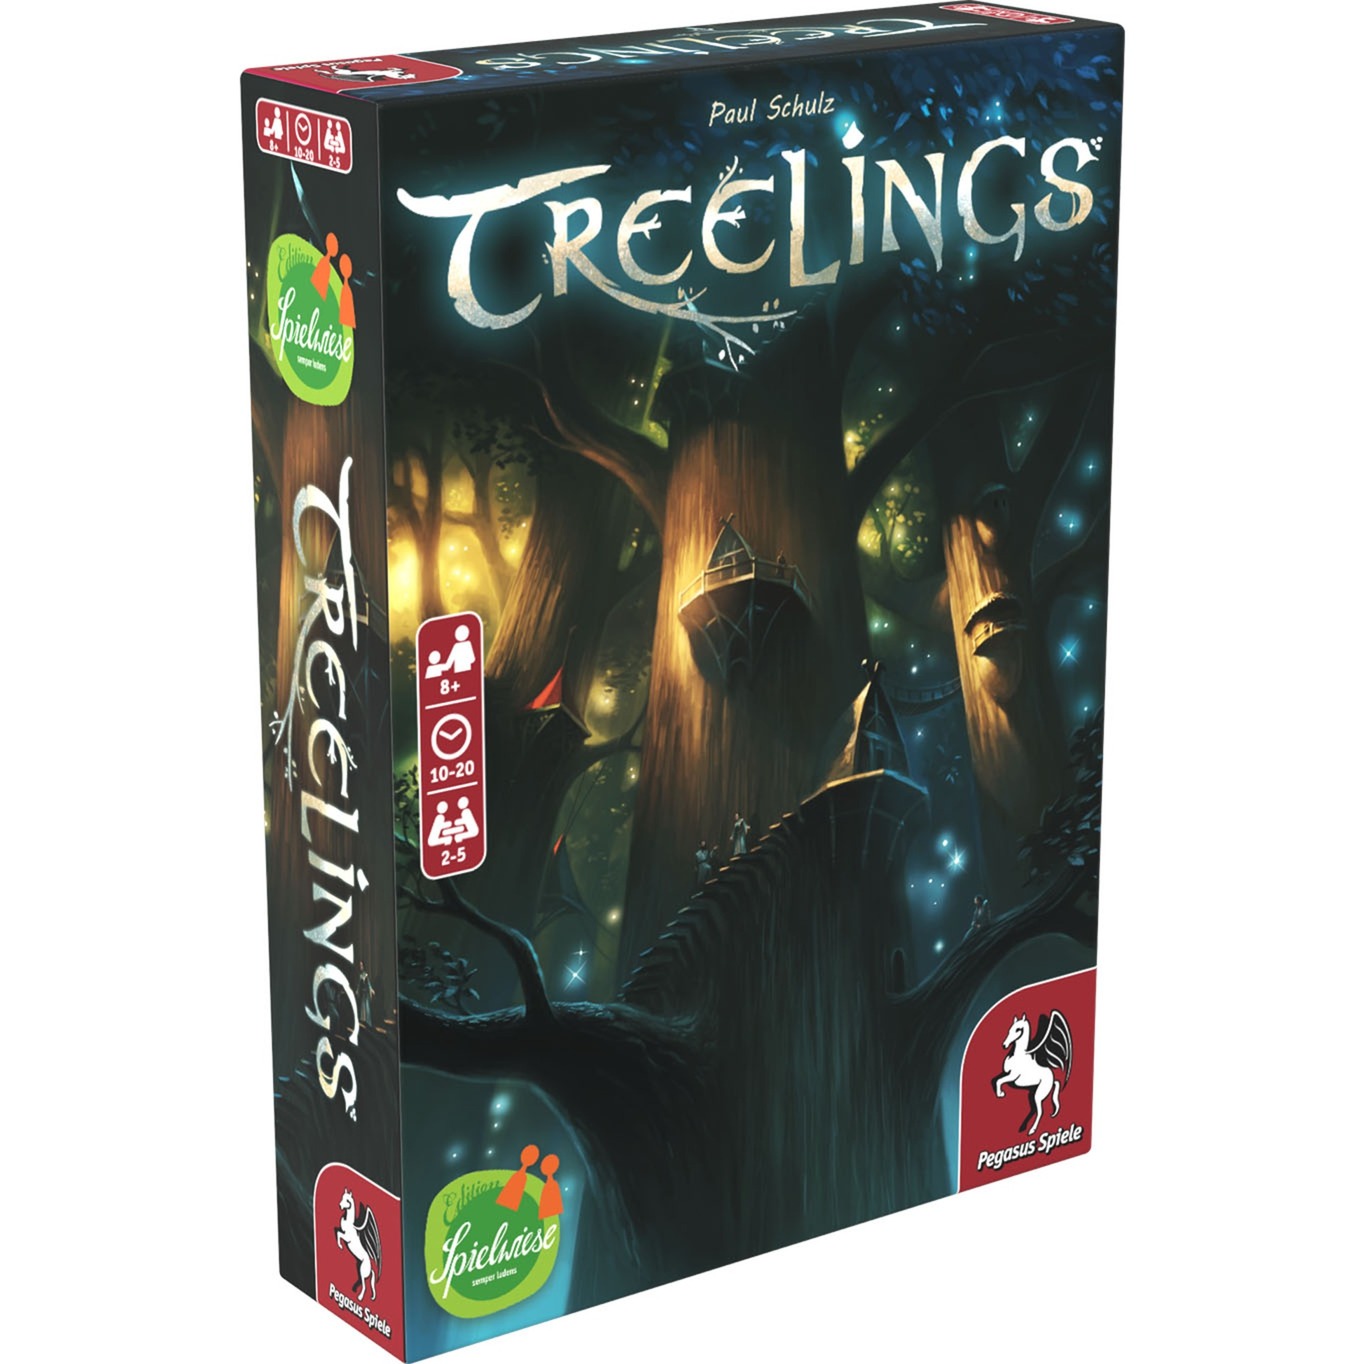 Image of Alternate - Treelings, Kartenspiel online einkaufen bei Alternate